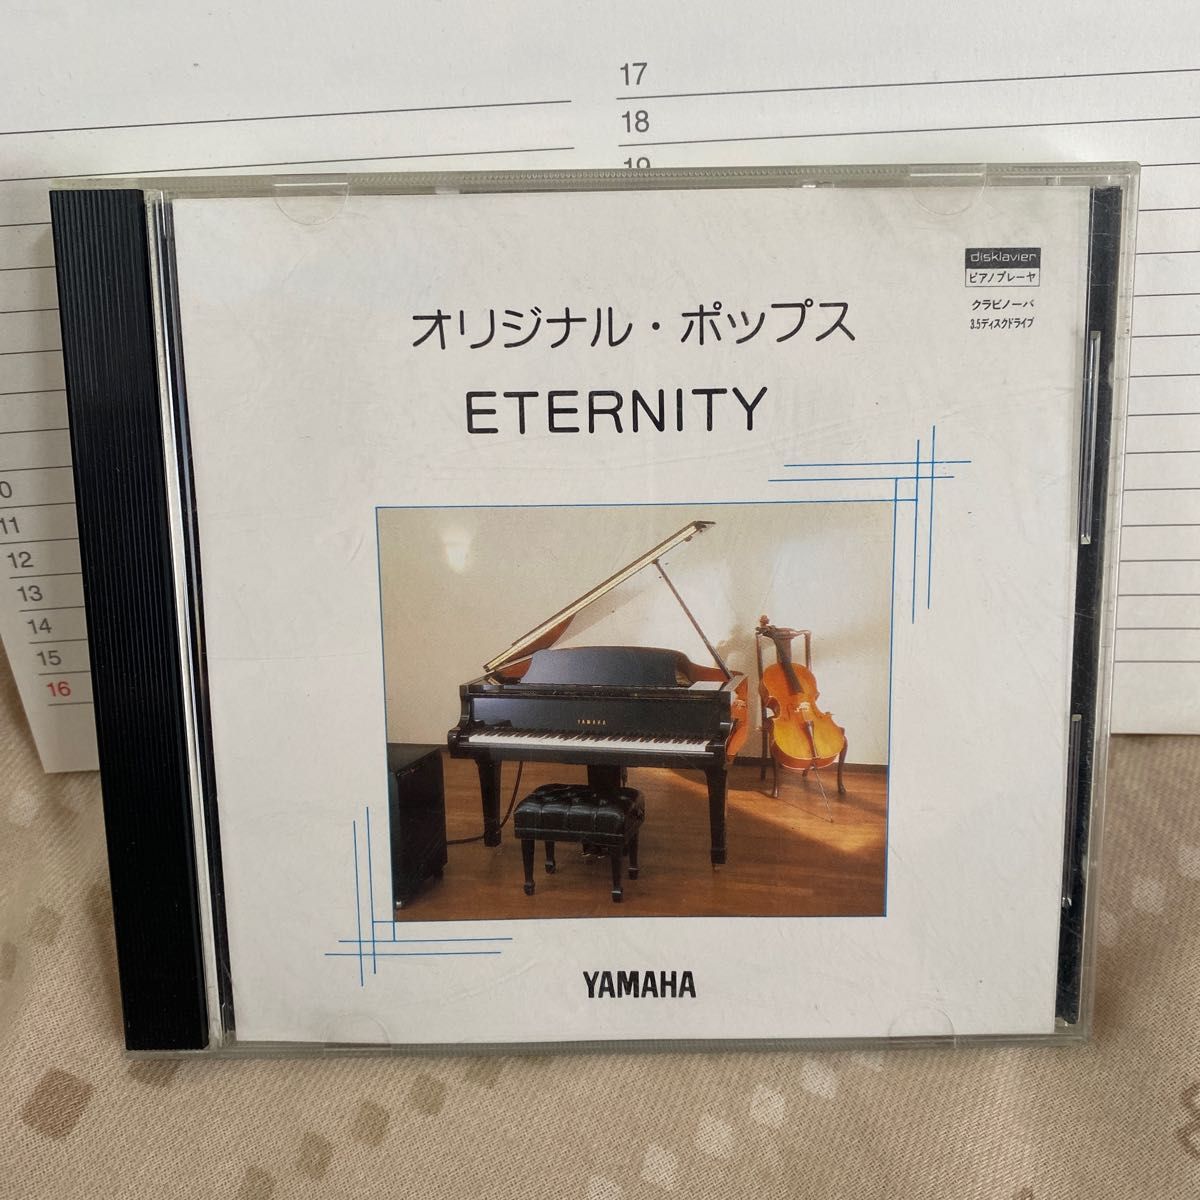 YAMAHA ピアノ自動演奏 フロッピーディスク - 通販 - gofukuyasan.com